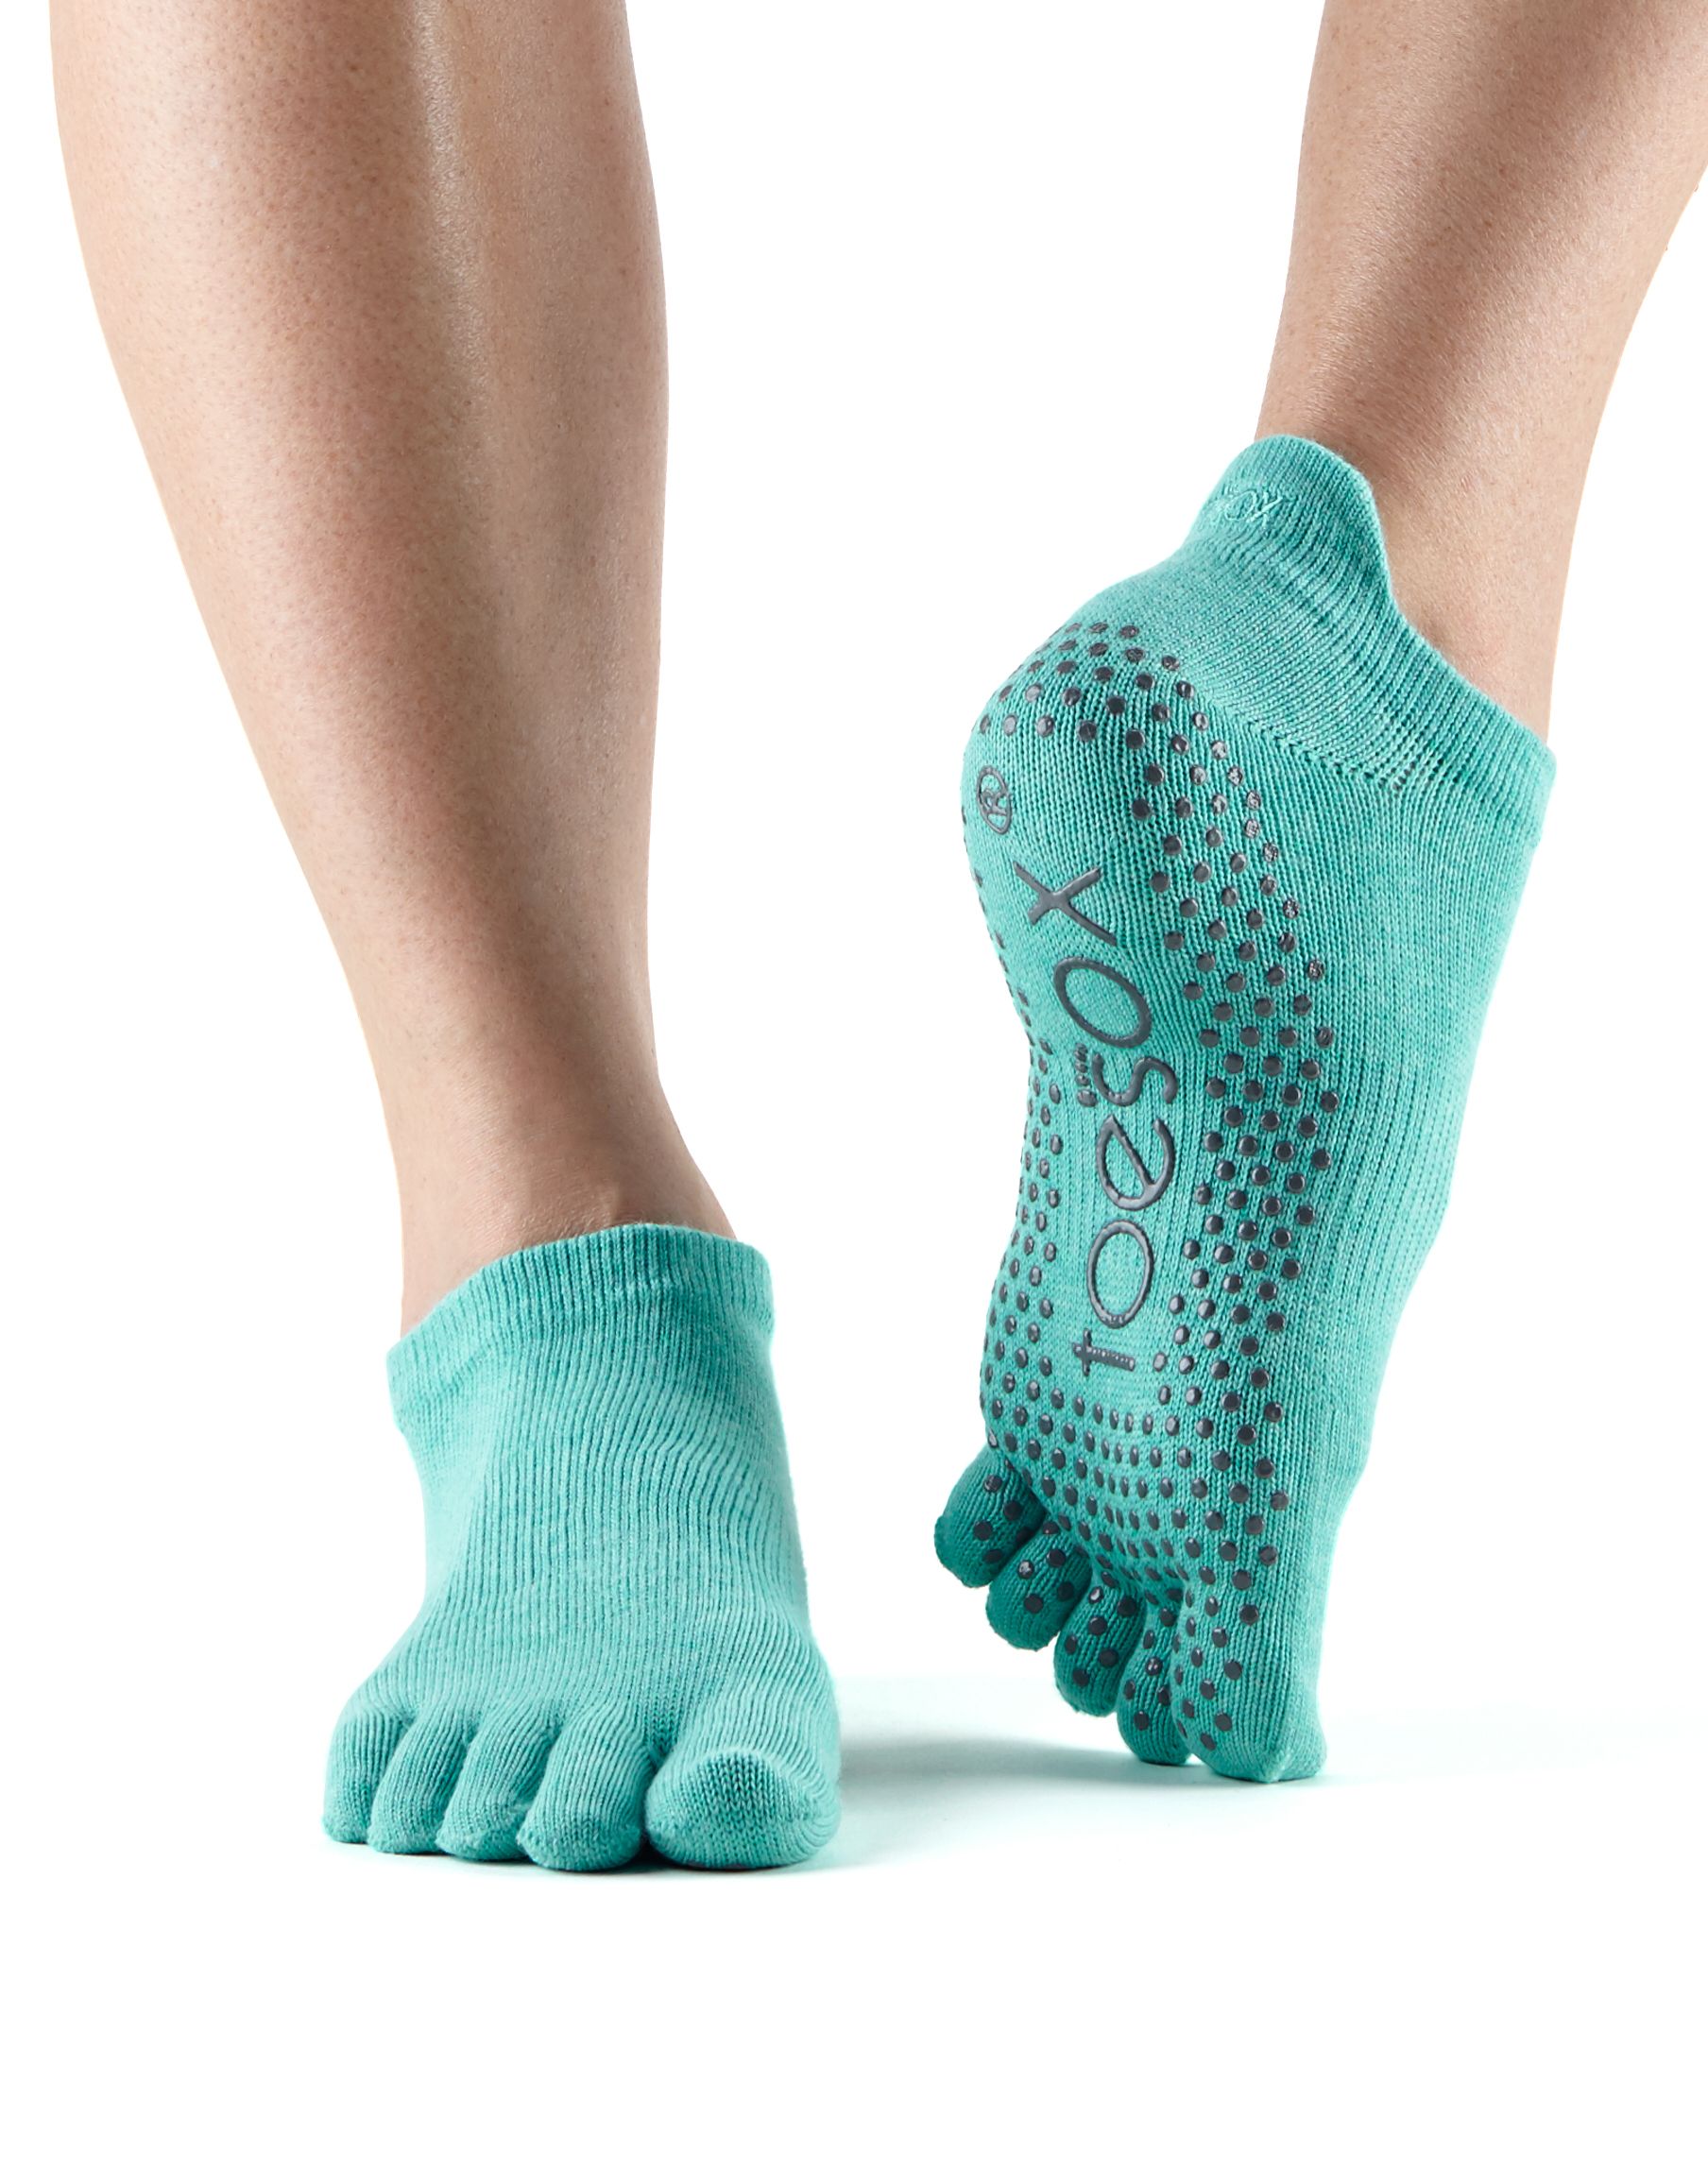 Geneeskunde Benadrukken duif Yoga sokken, waarom heb jij ze nodig? • Yoga-PilatesShop.nl